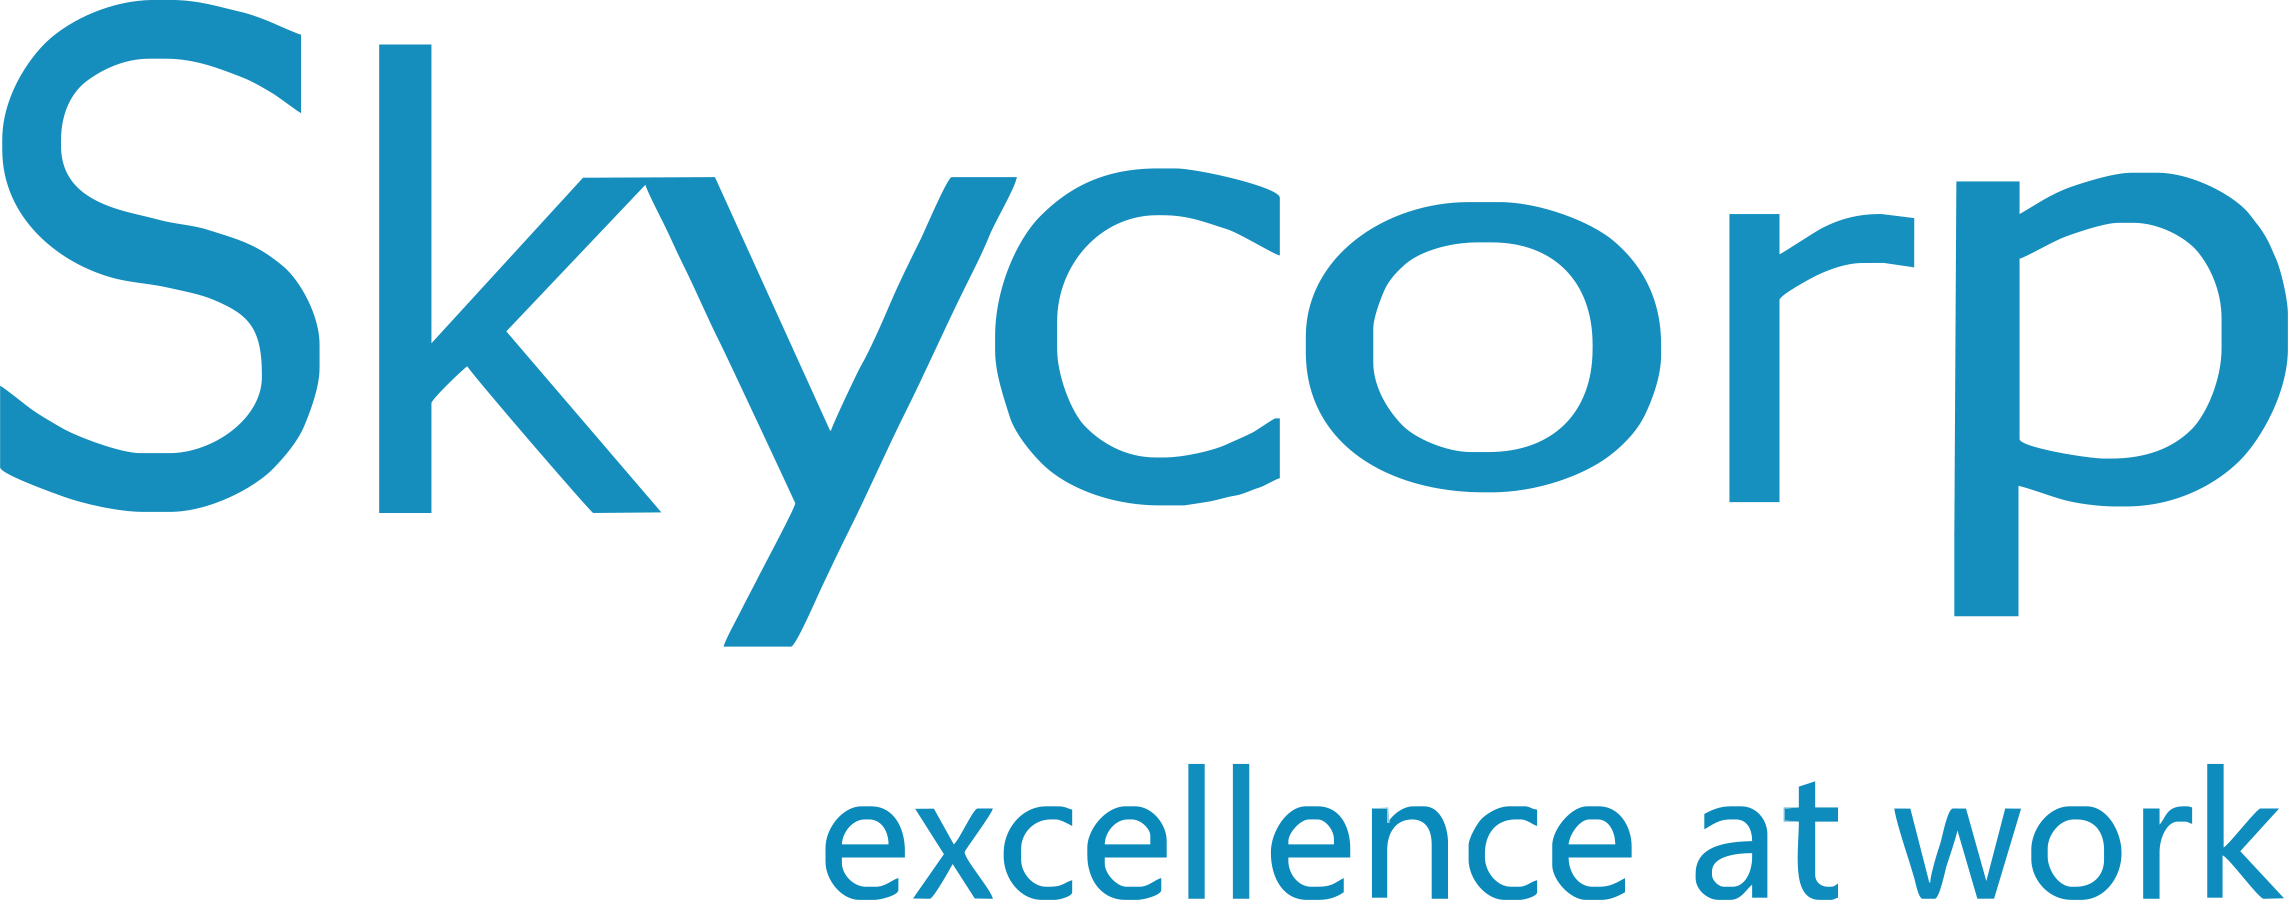 skycorp logo 无 NB